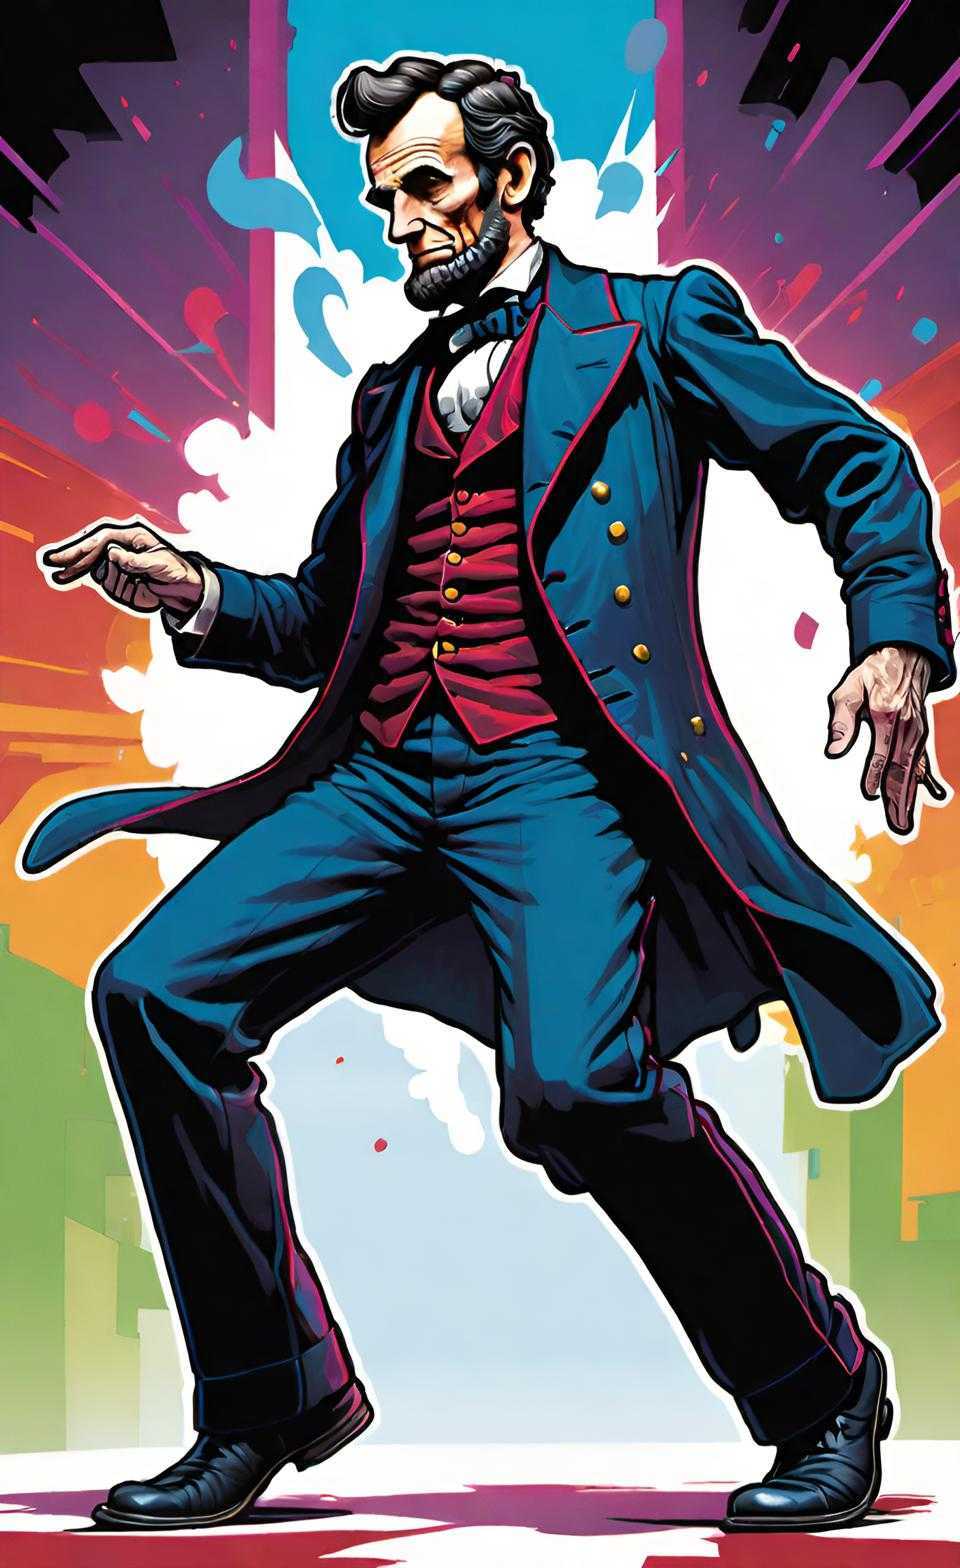 Abraham Lincoln dancing